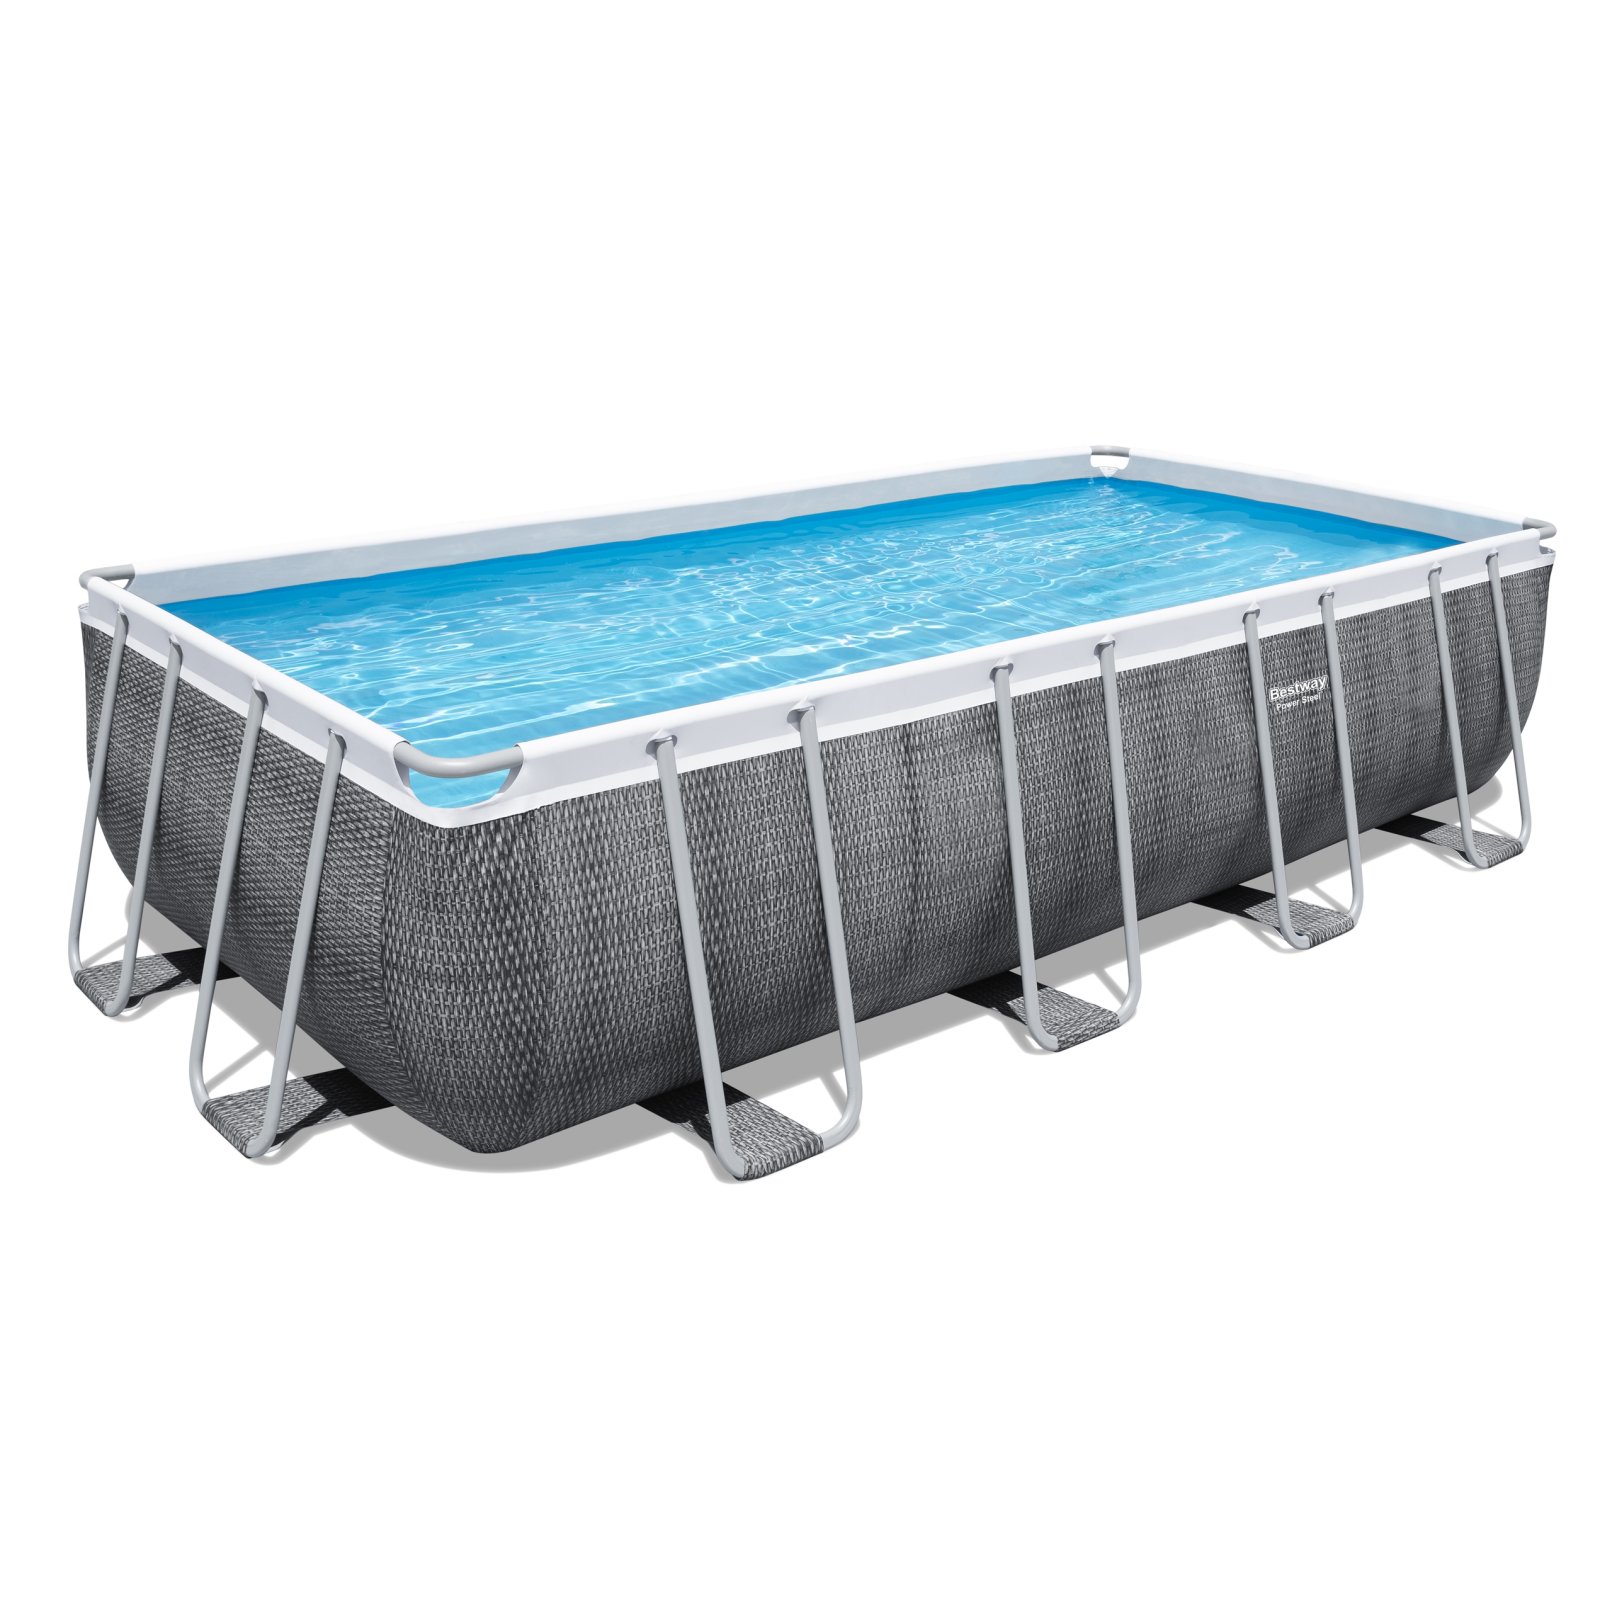 Rattan 549x274x122cm | Garten 56998 Frame Pools Co. Power & & Freizeit grau Rectangular Pool Optik Pool | Haus, Freizeit Steel | | Bestway Pools Set